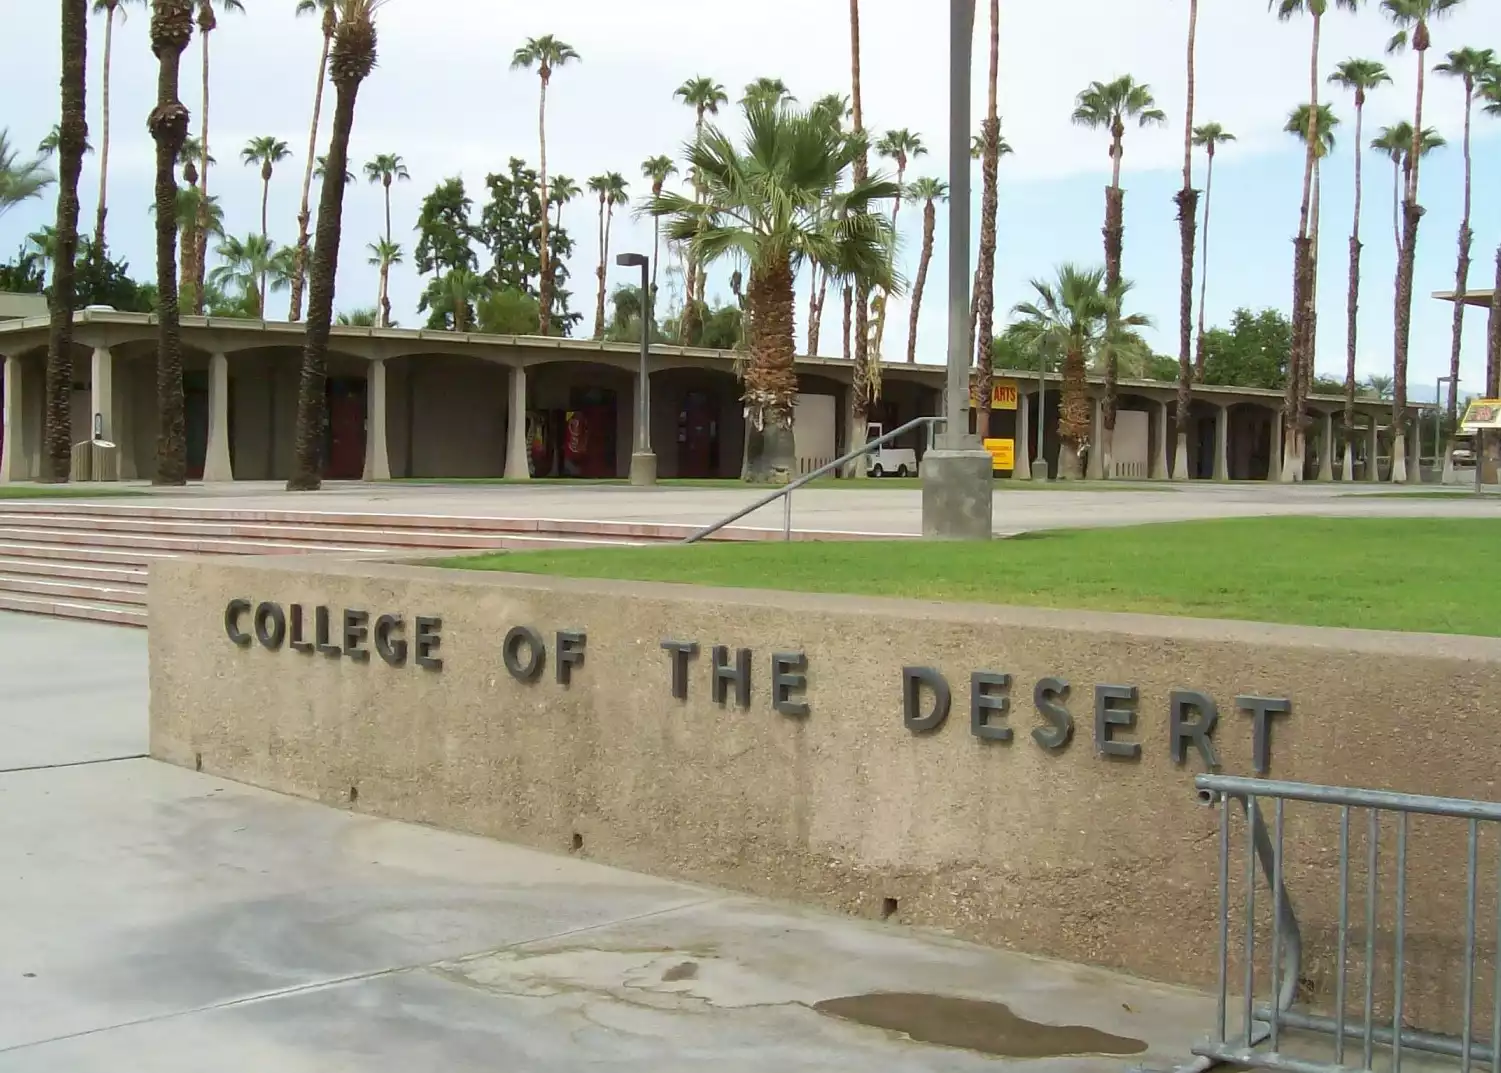 كلية ديسيرت College of the Desert